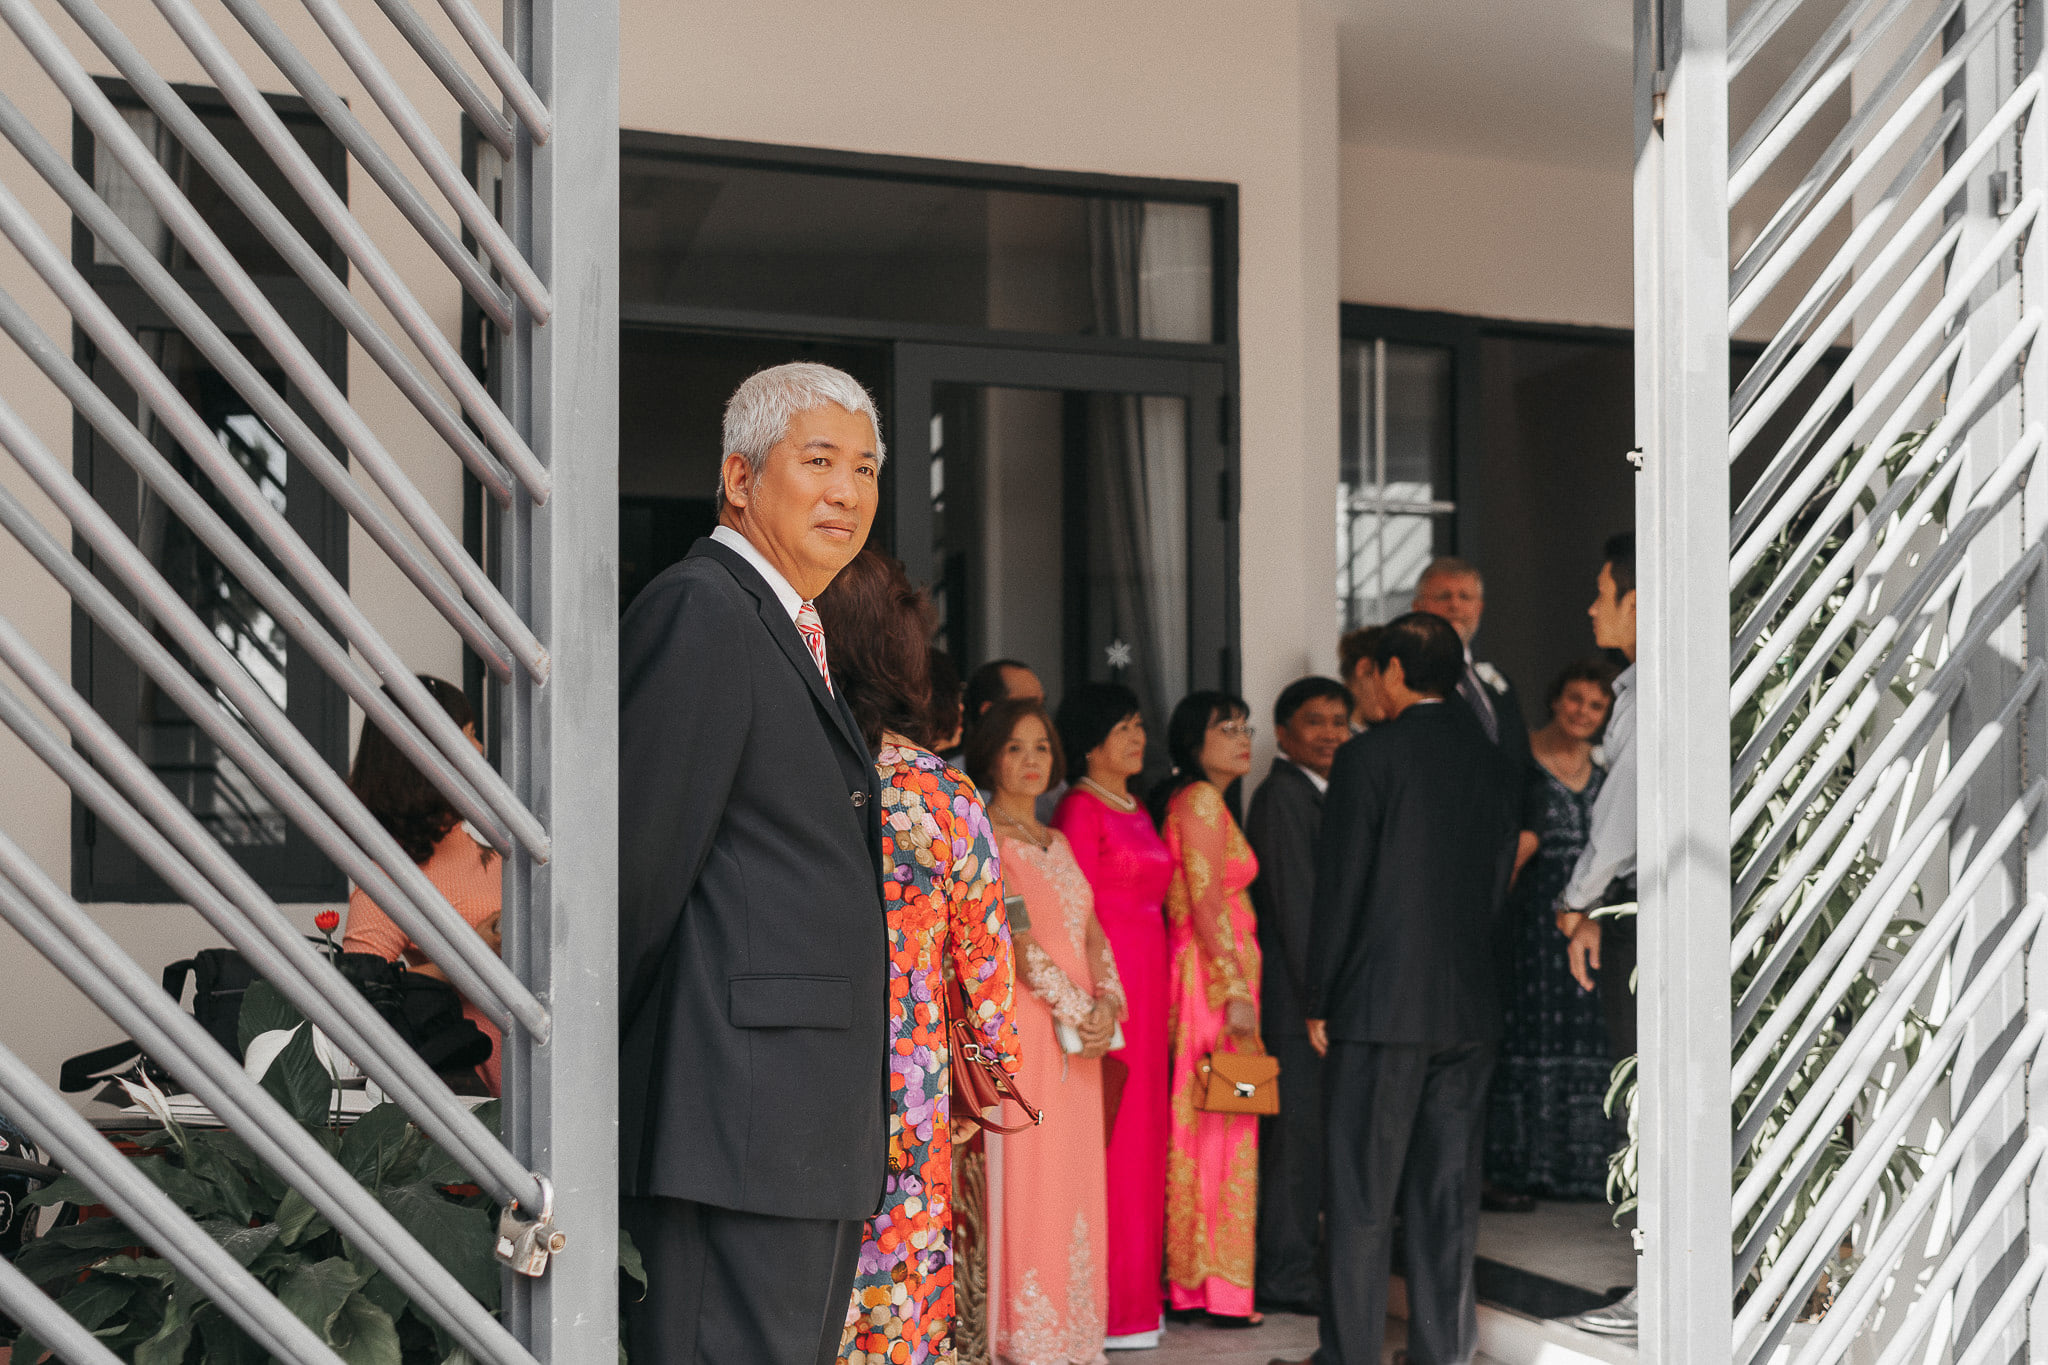 The Wedding Day | Marrten & Trang at Champa Island